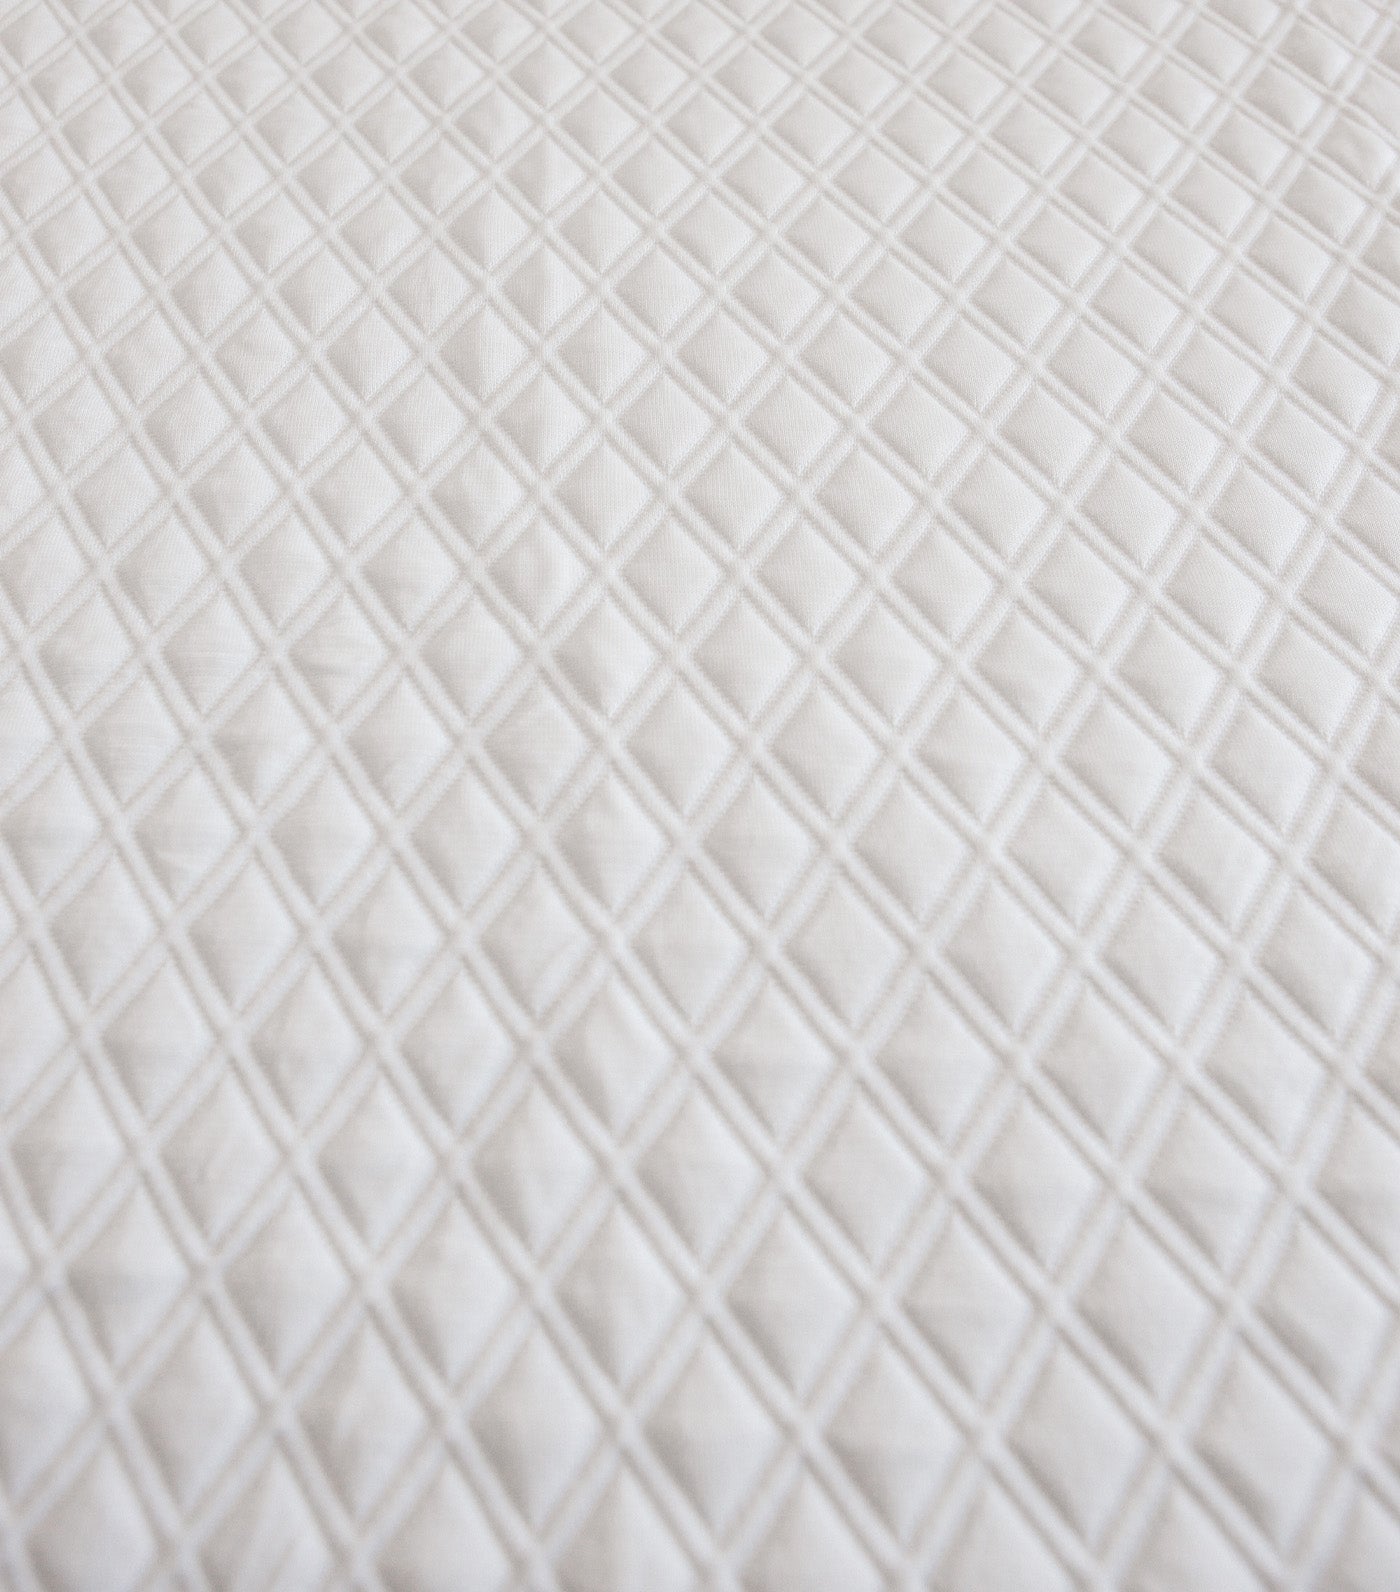 linen & homes cooltouch waterproof mattress protector